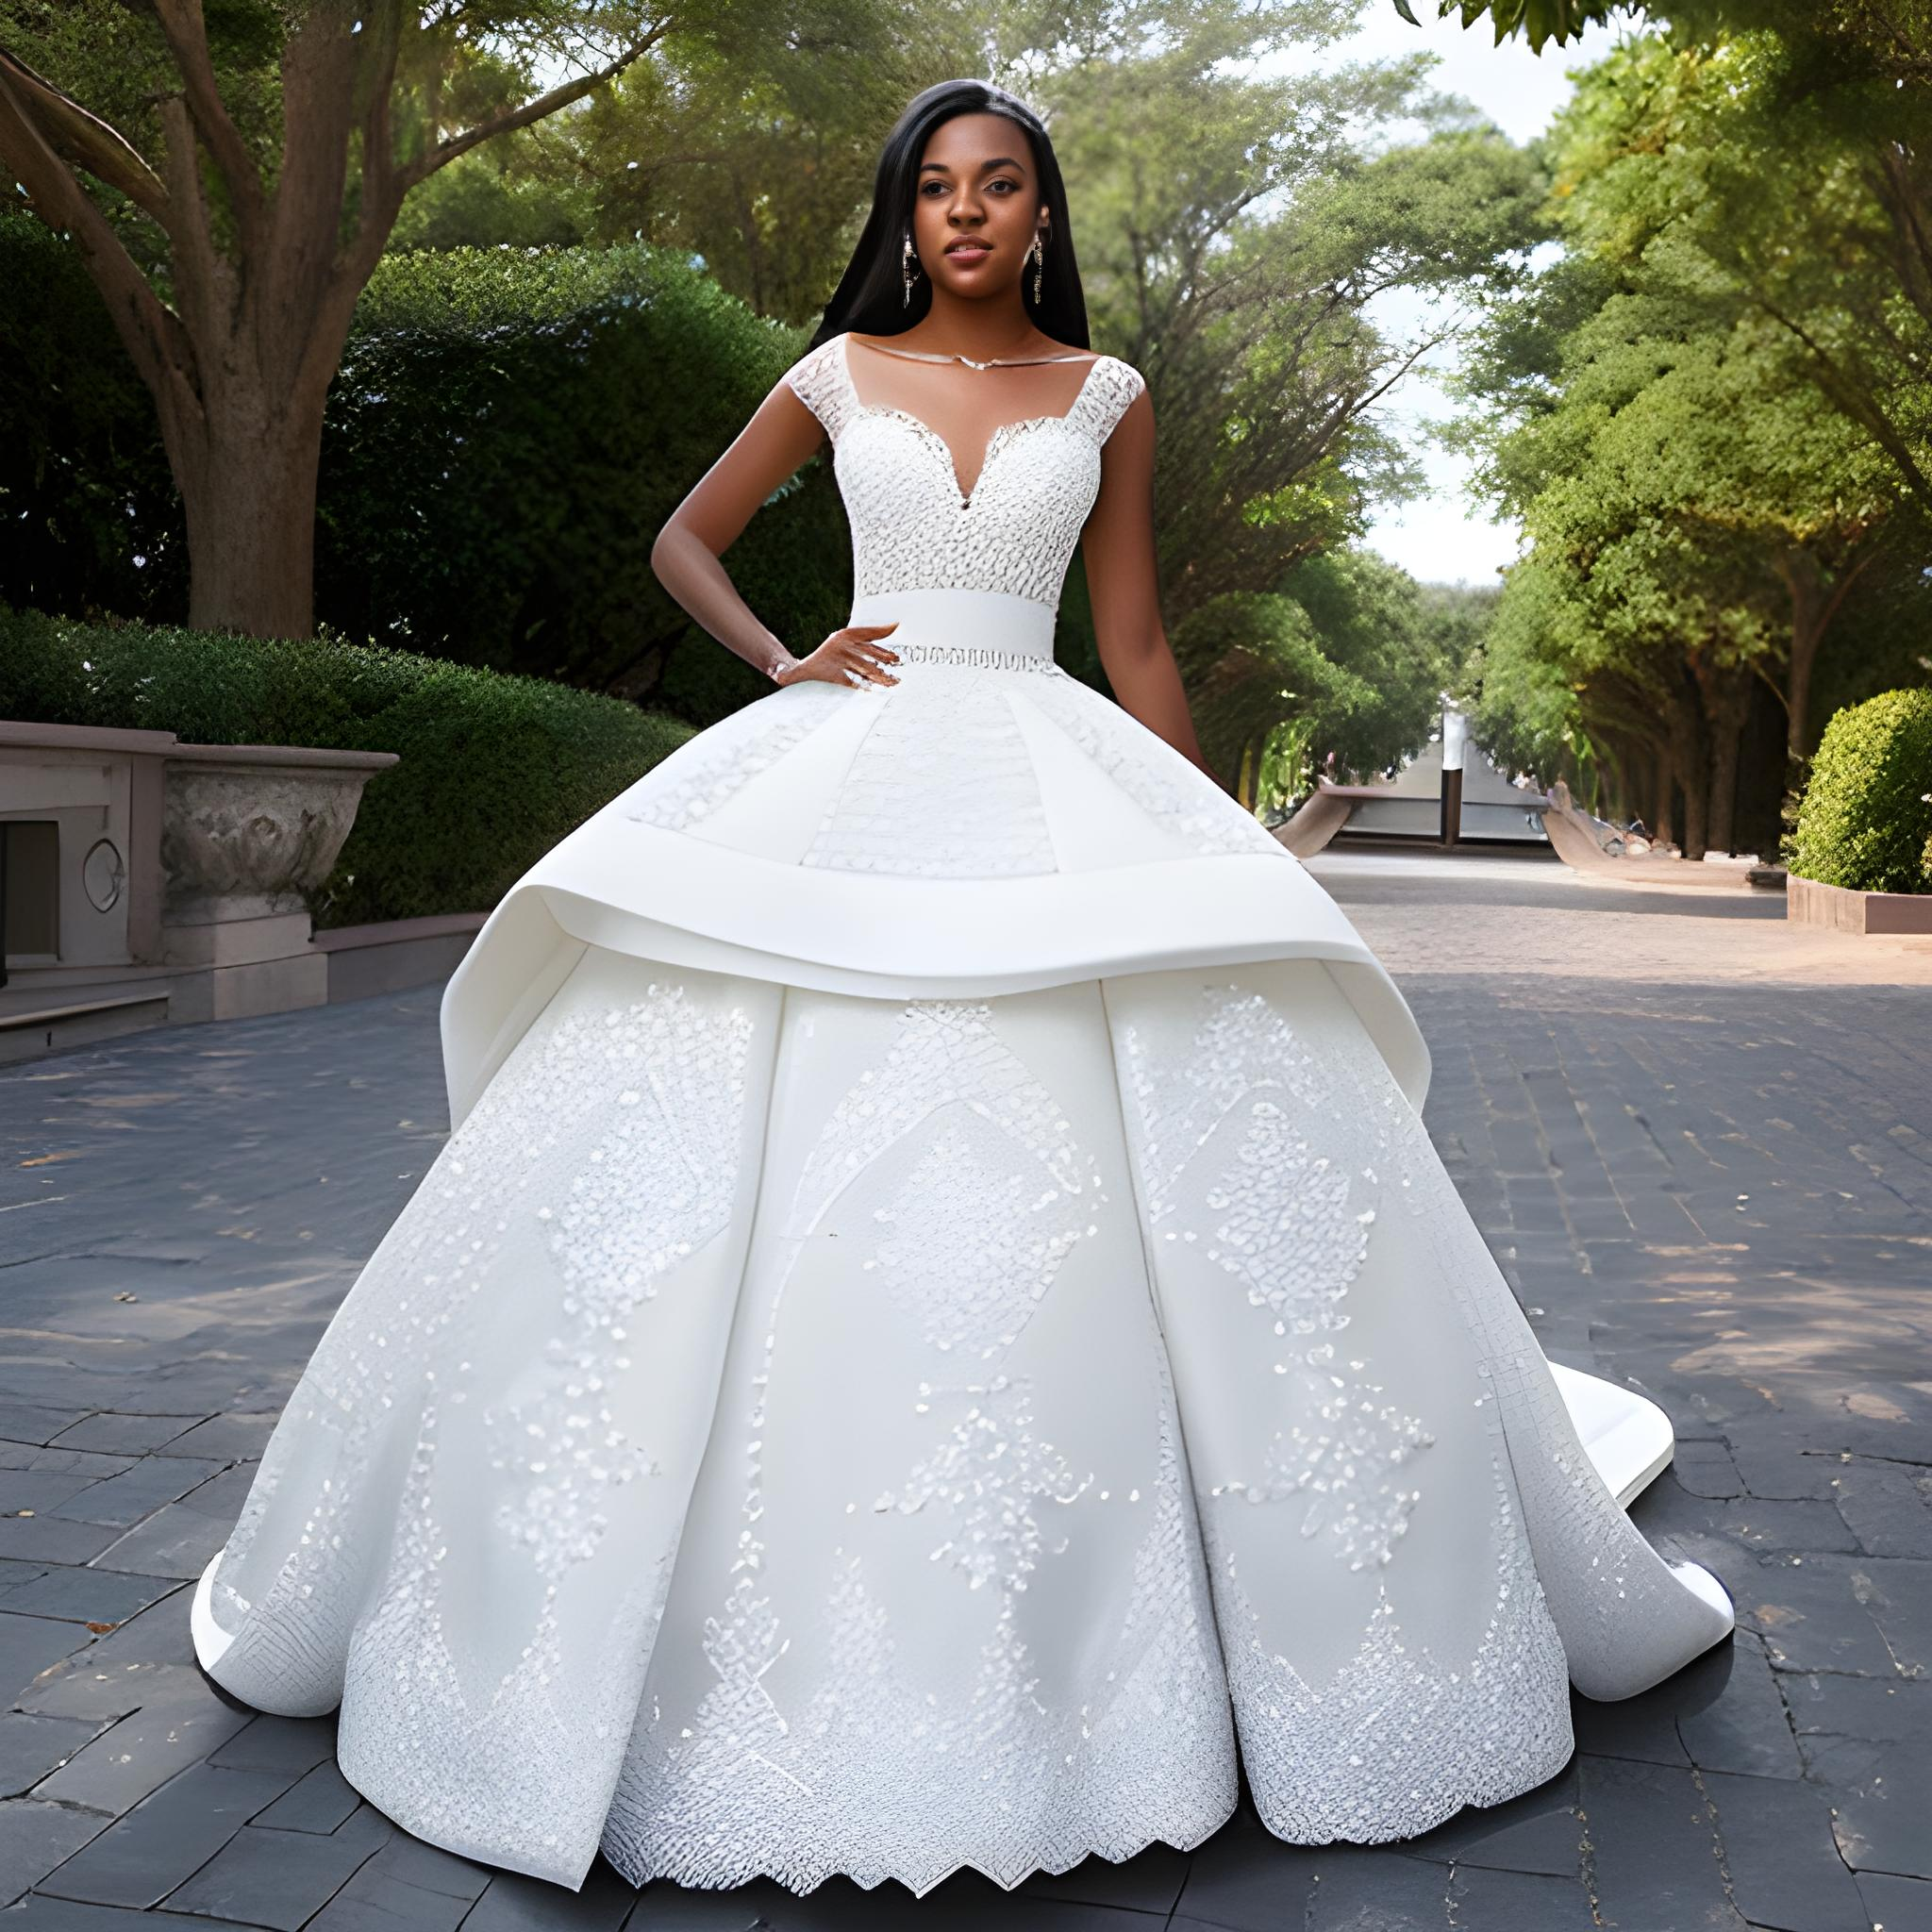 Rectangle Shape Body Choosing the Perfect Wedding Dress